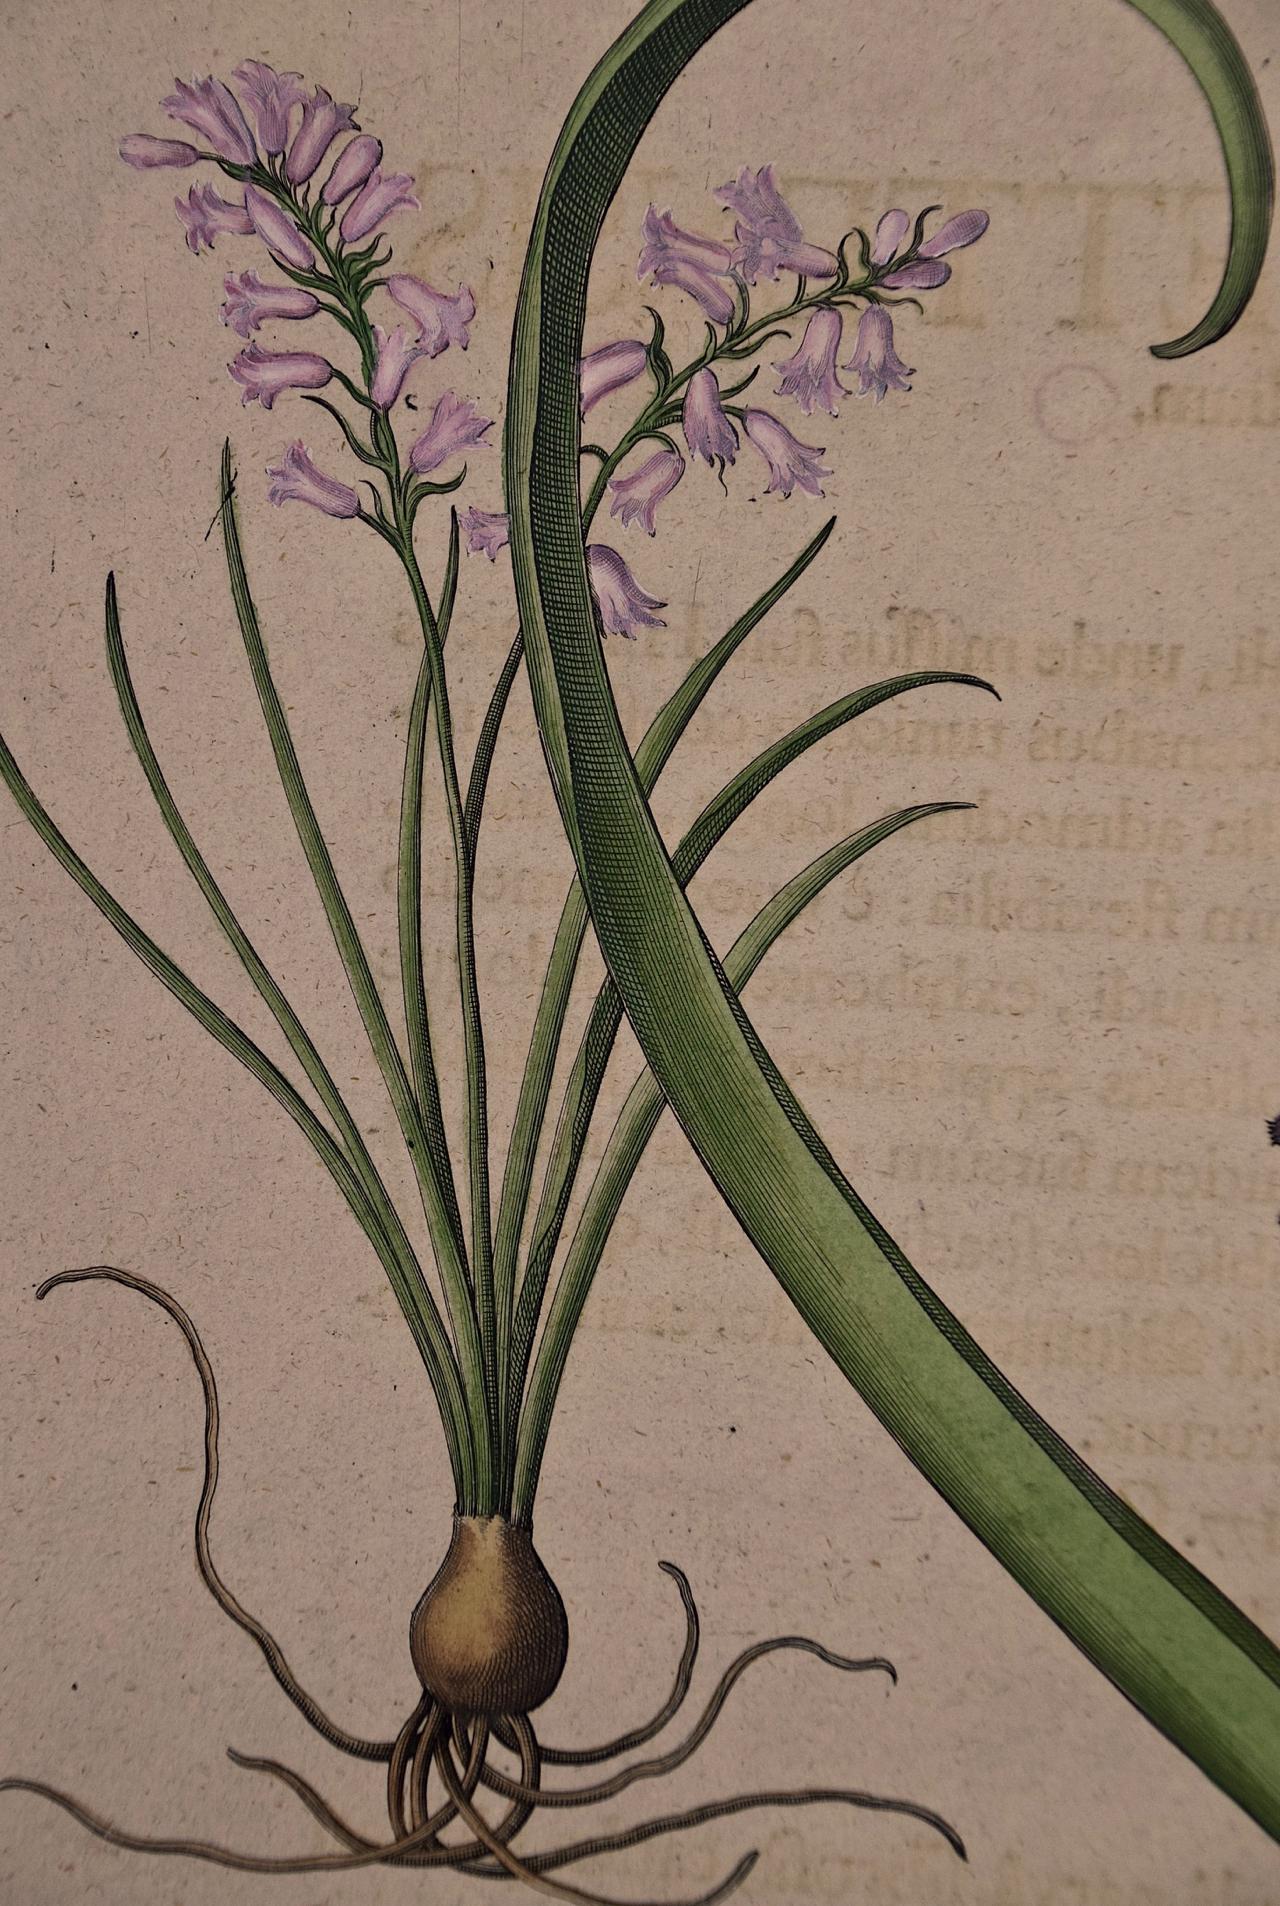 Flowering Hyacinth & Calla Plants: A Besler Hand-colored Botanical Engraving - Print by Basilius Besler